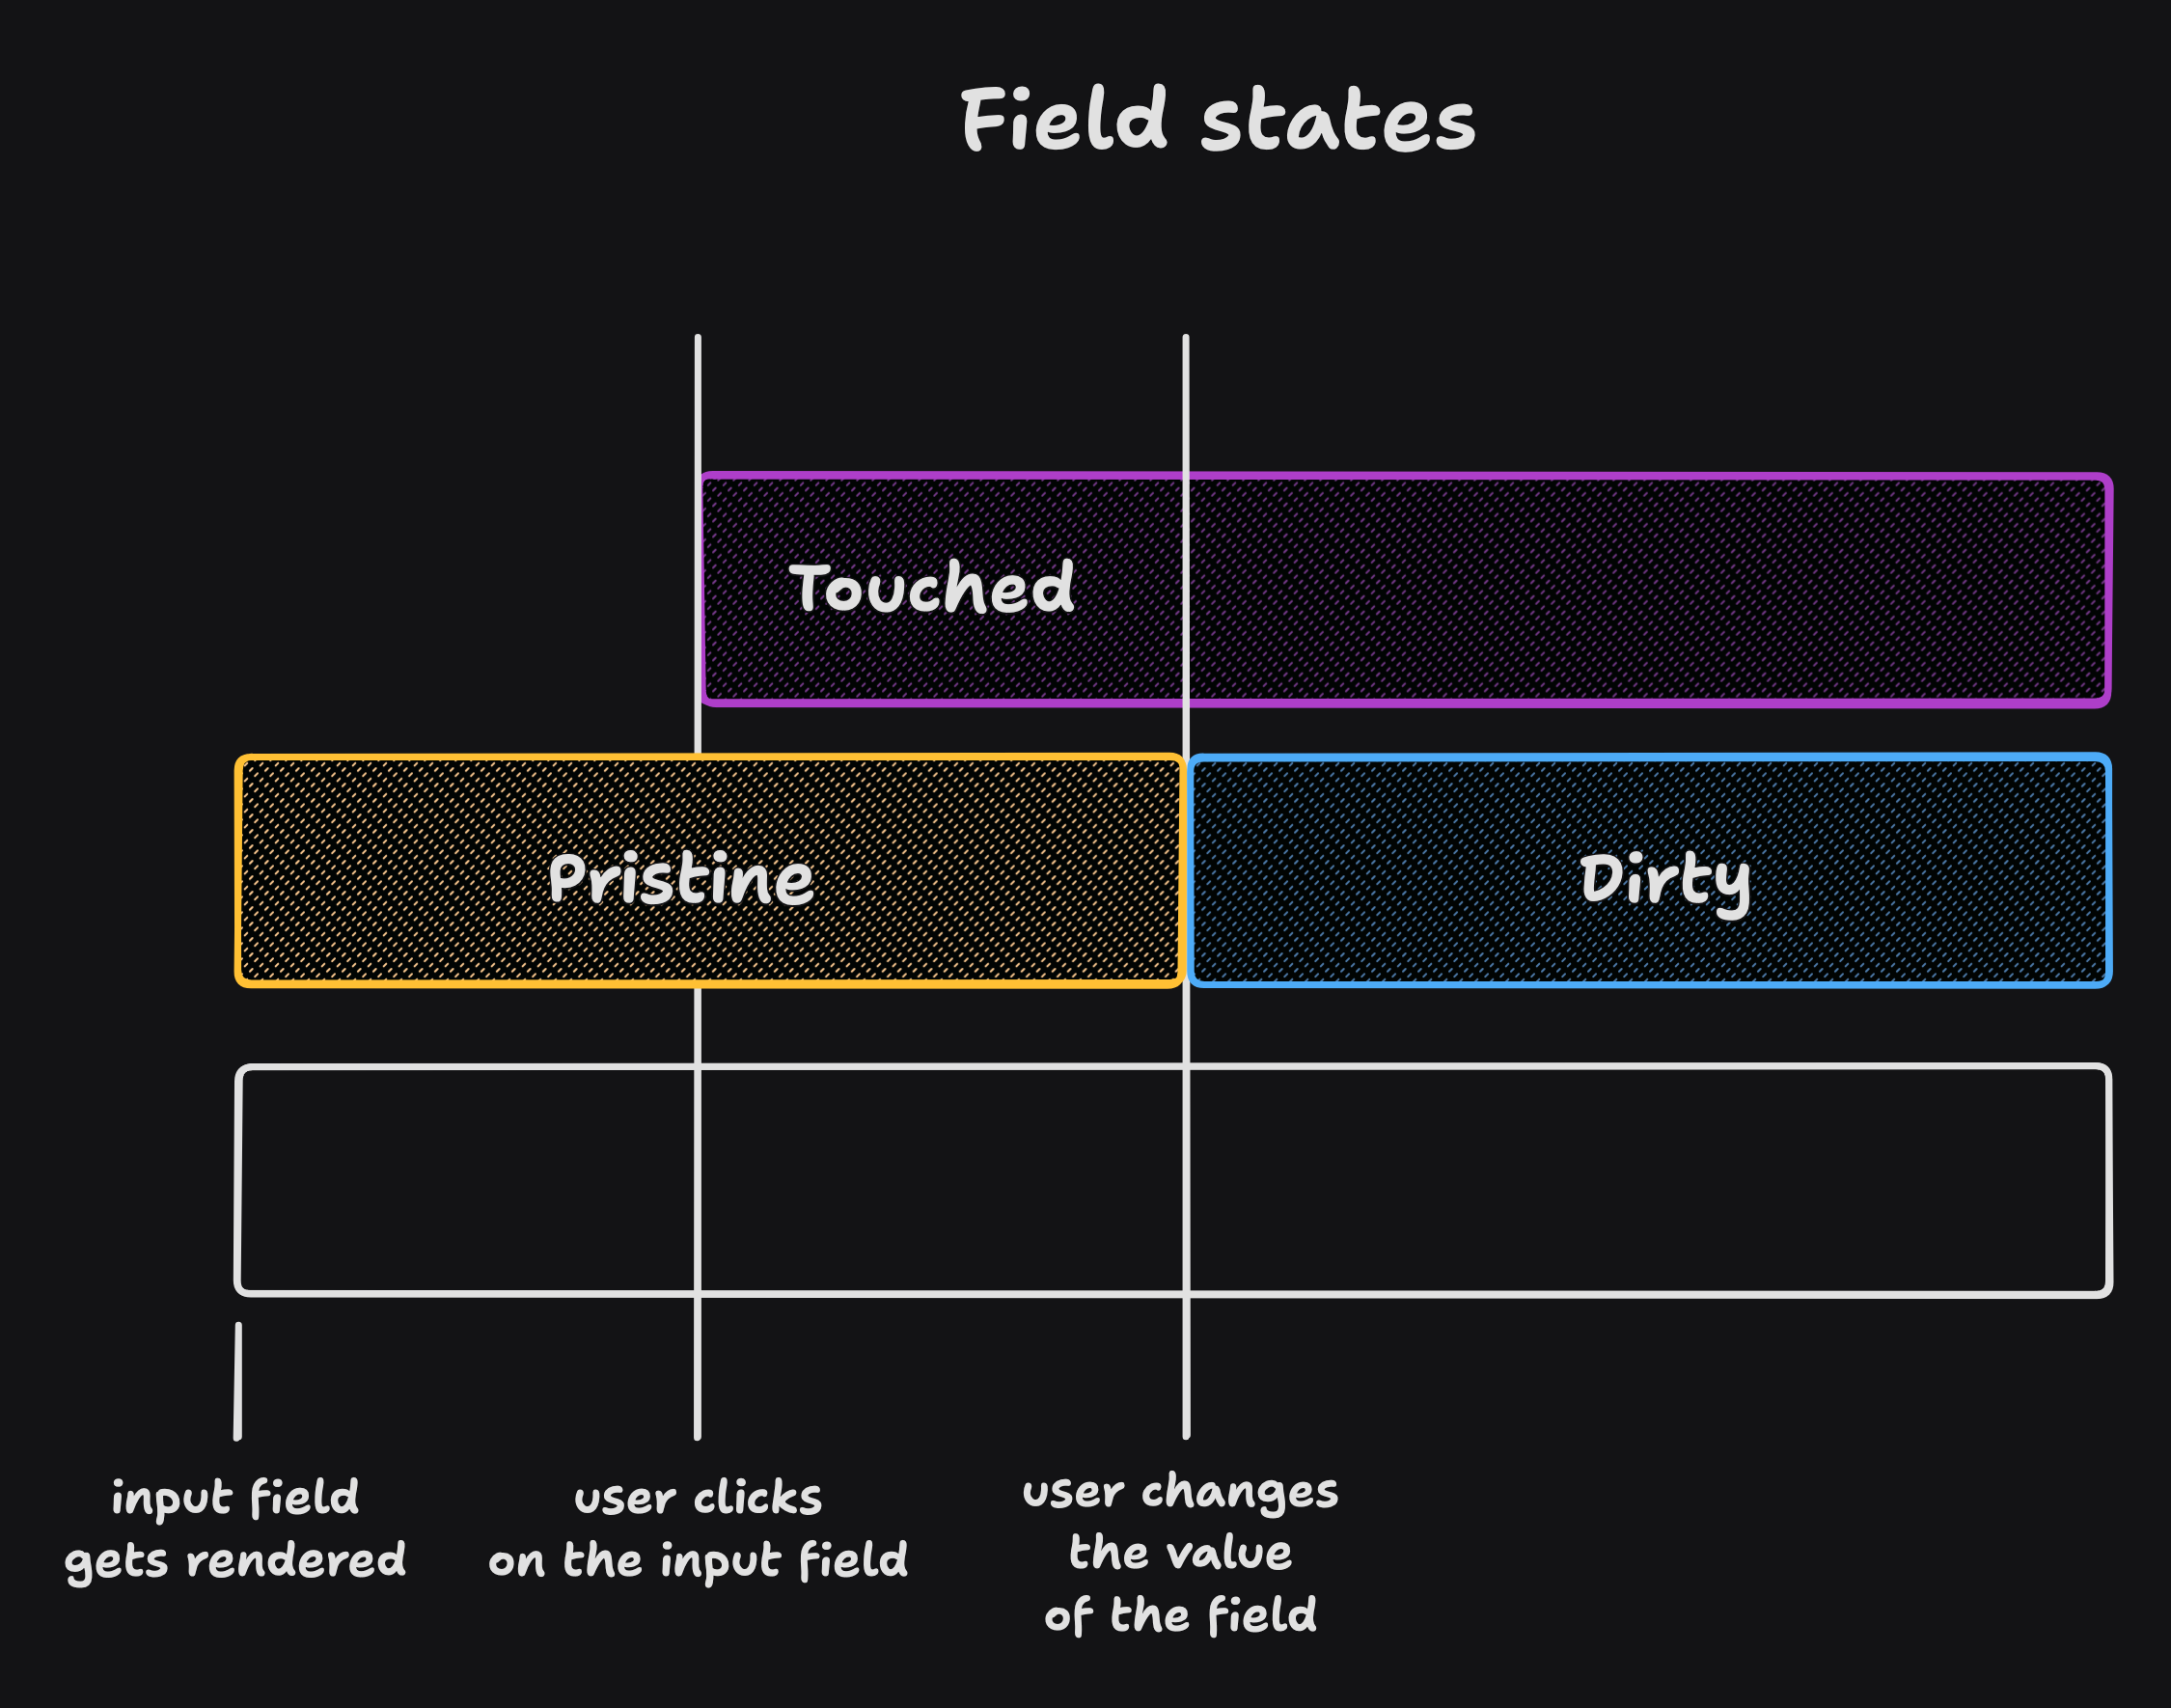 Field states